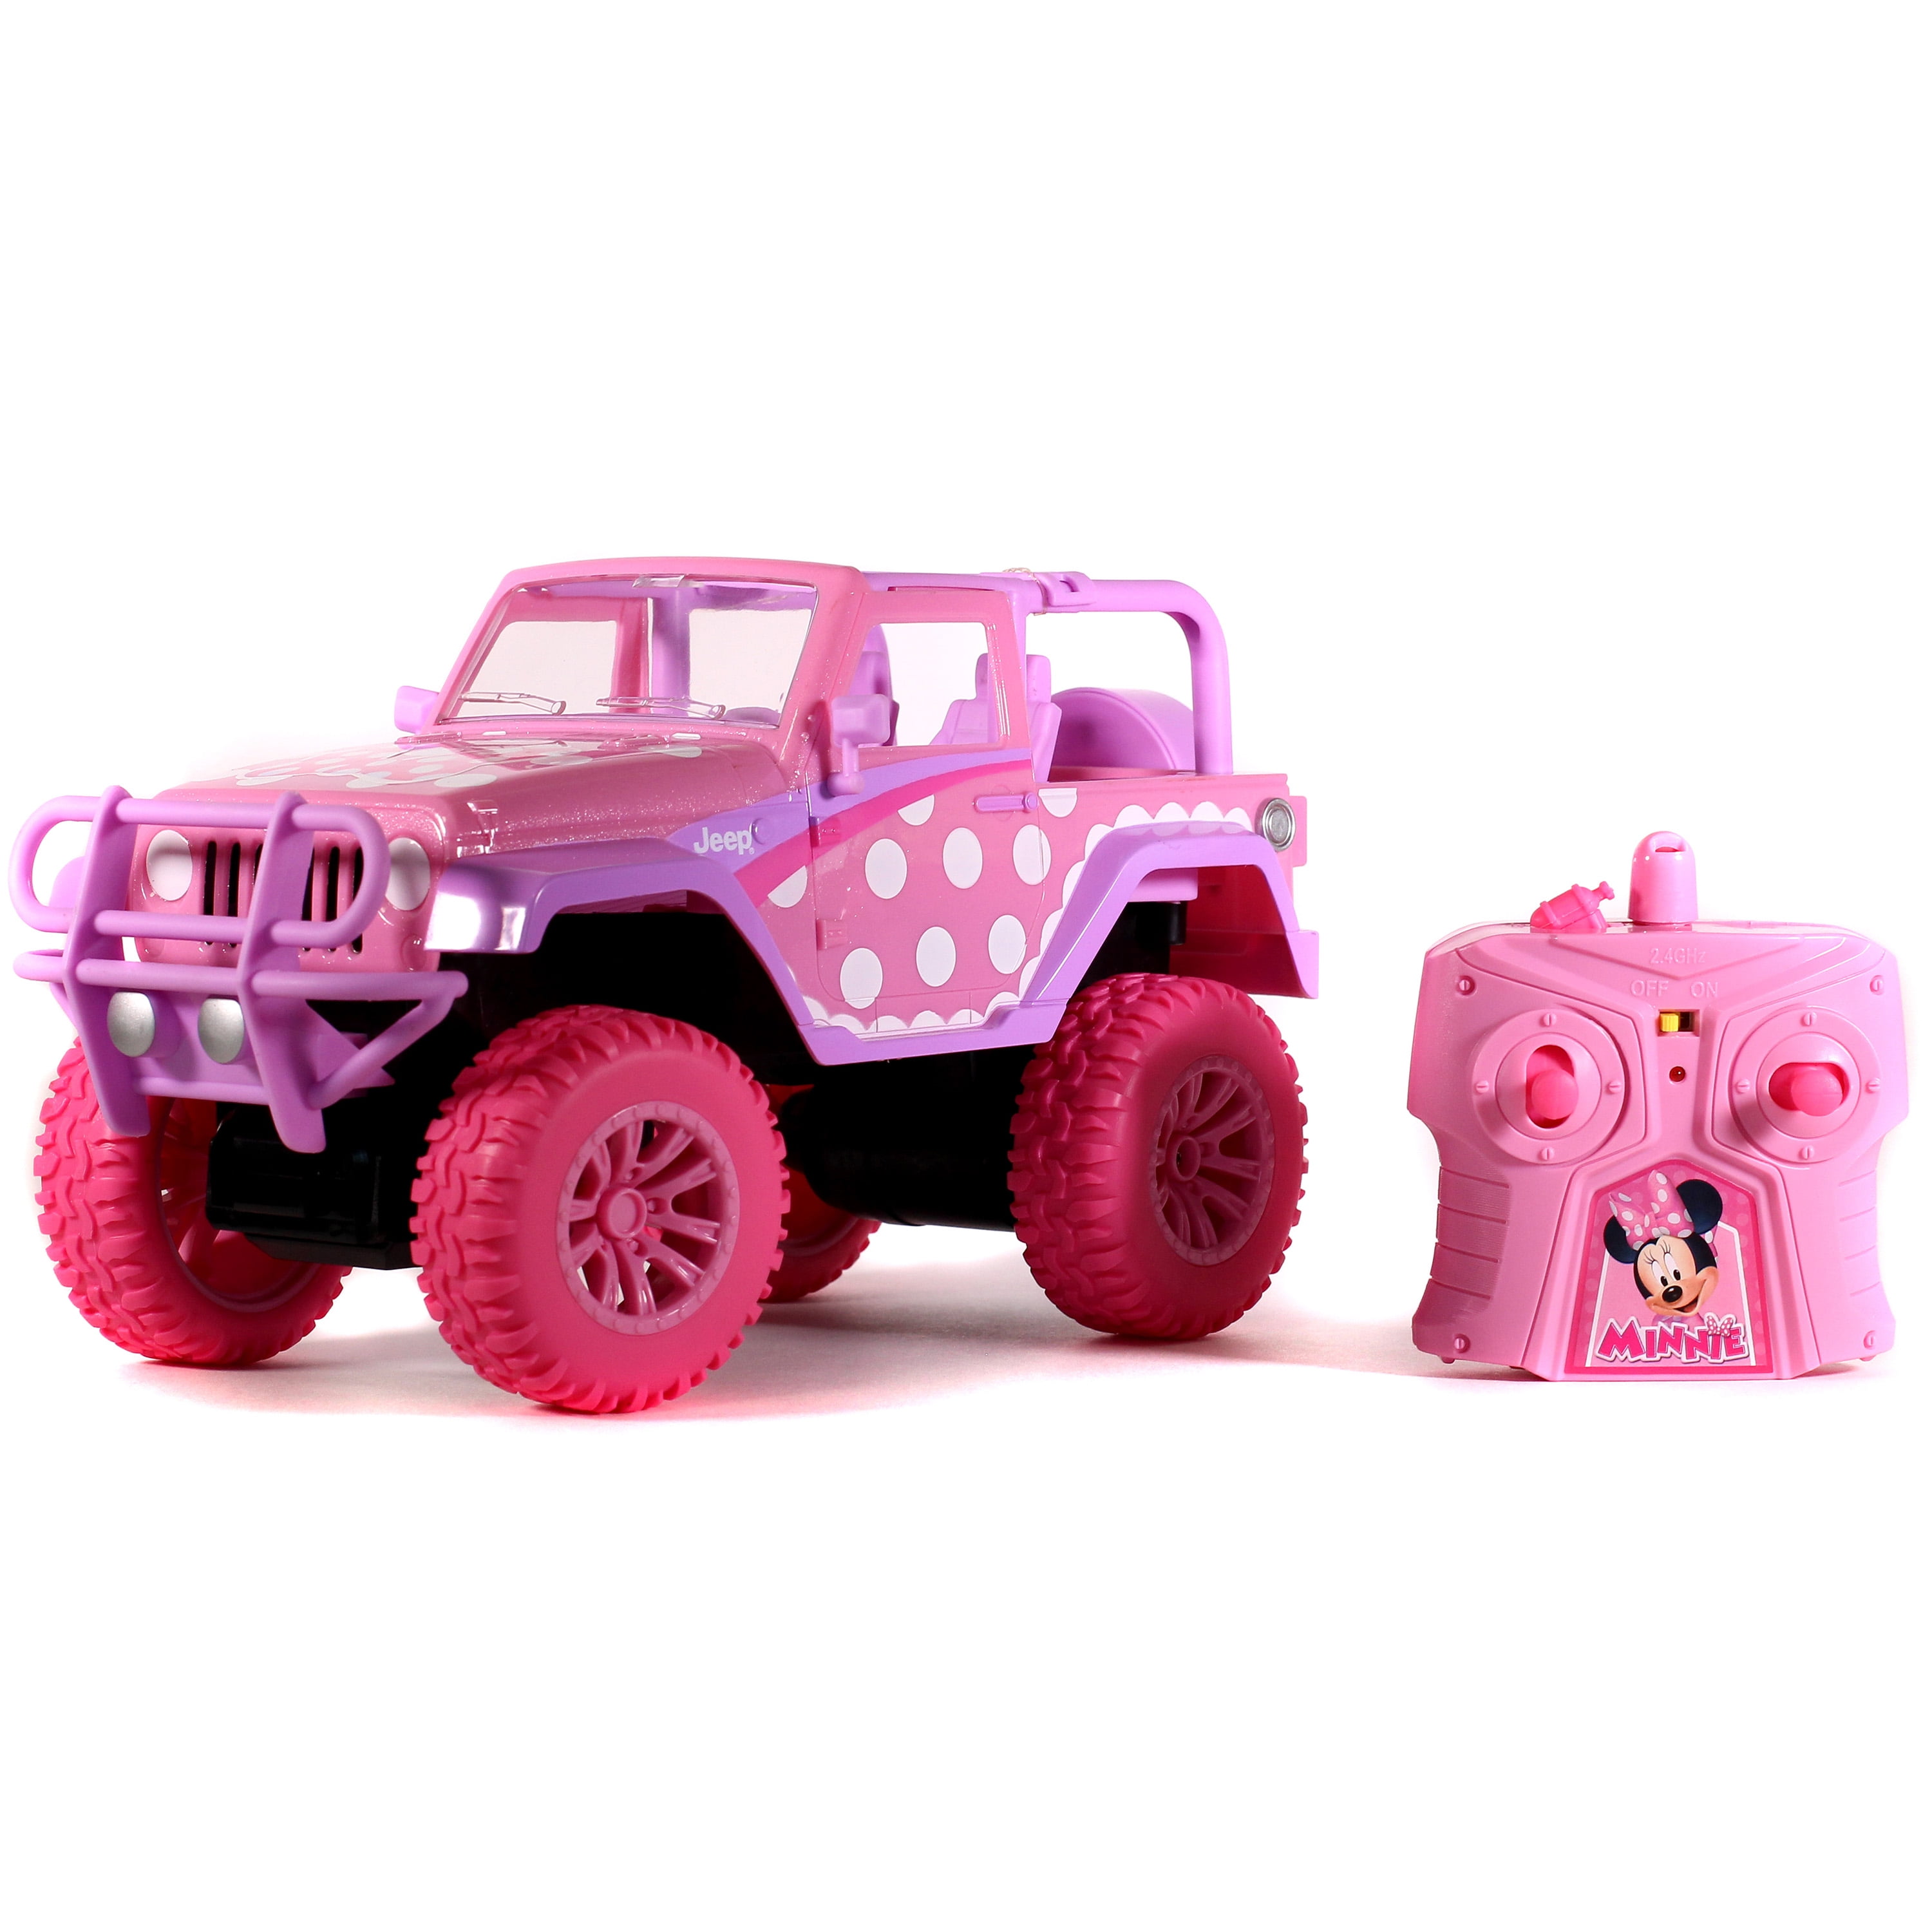 Big Foot Jeep R/C Vehicle 1:16 Scale Pink Jada Toys GIRLMAZING 96991 